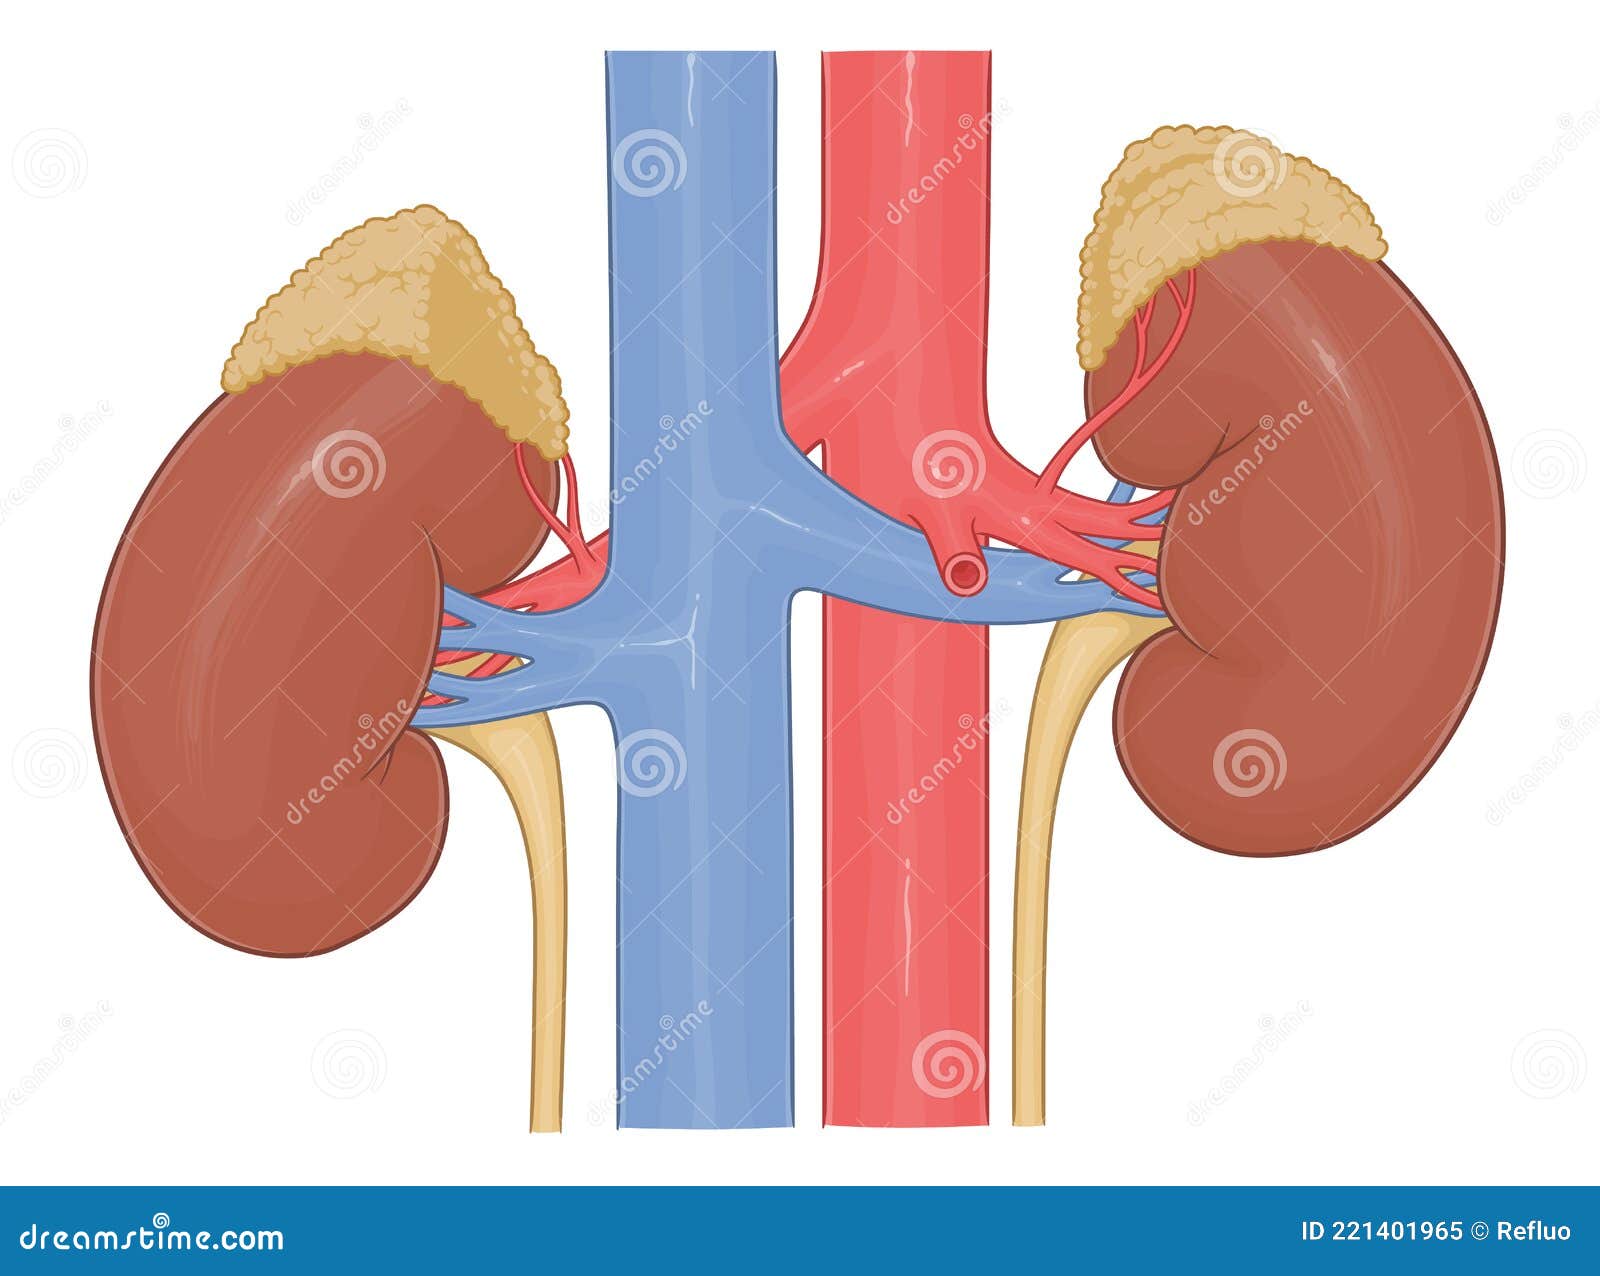 Human Kidney Vector Hd Images, Human Organ Kidney, Human Organ, Liver ...